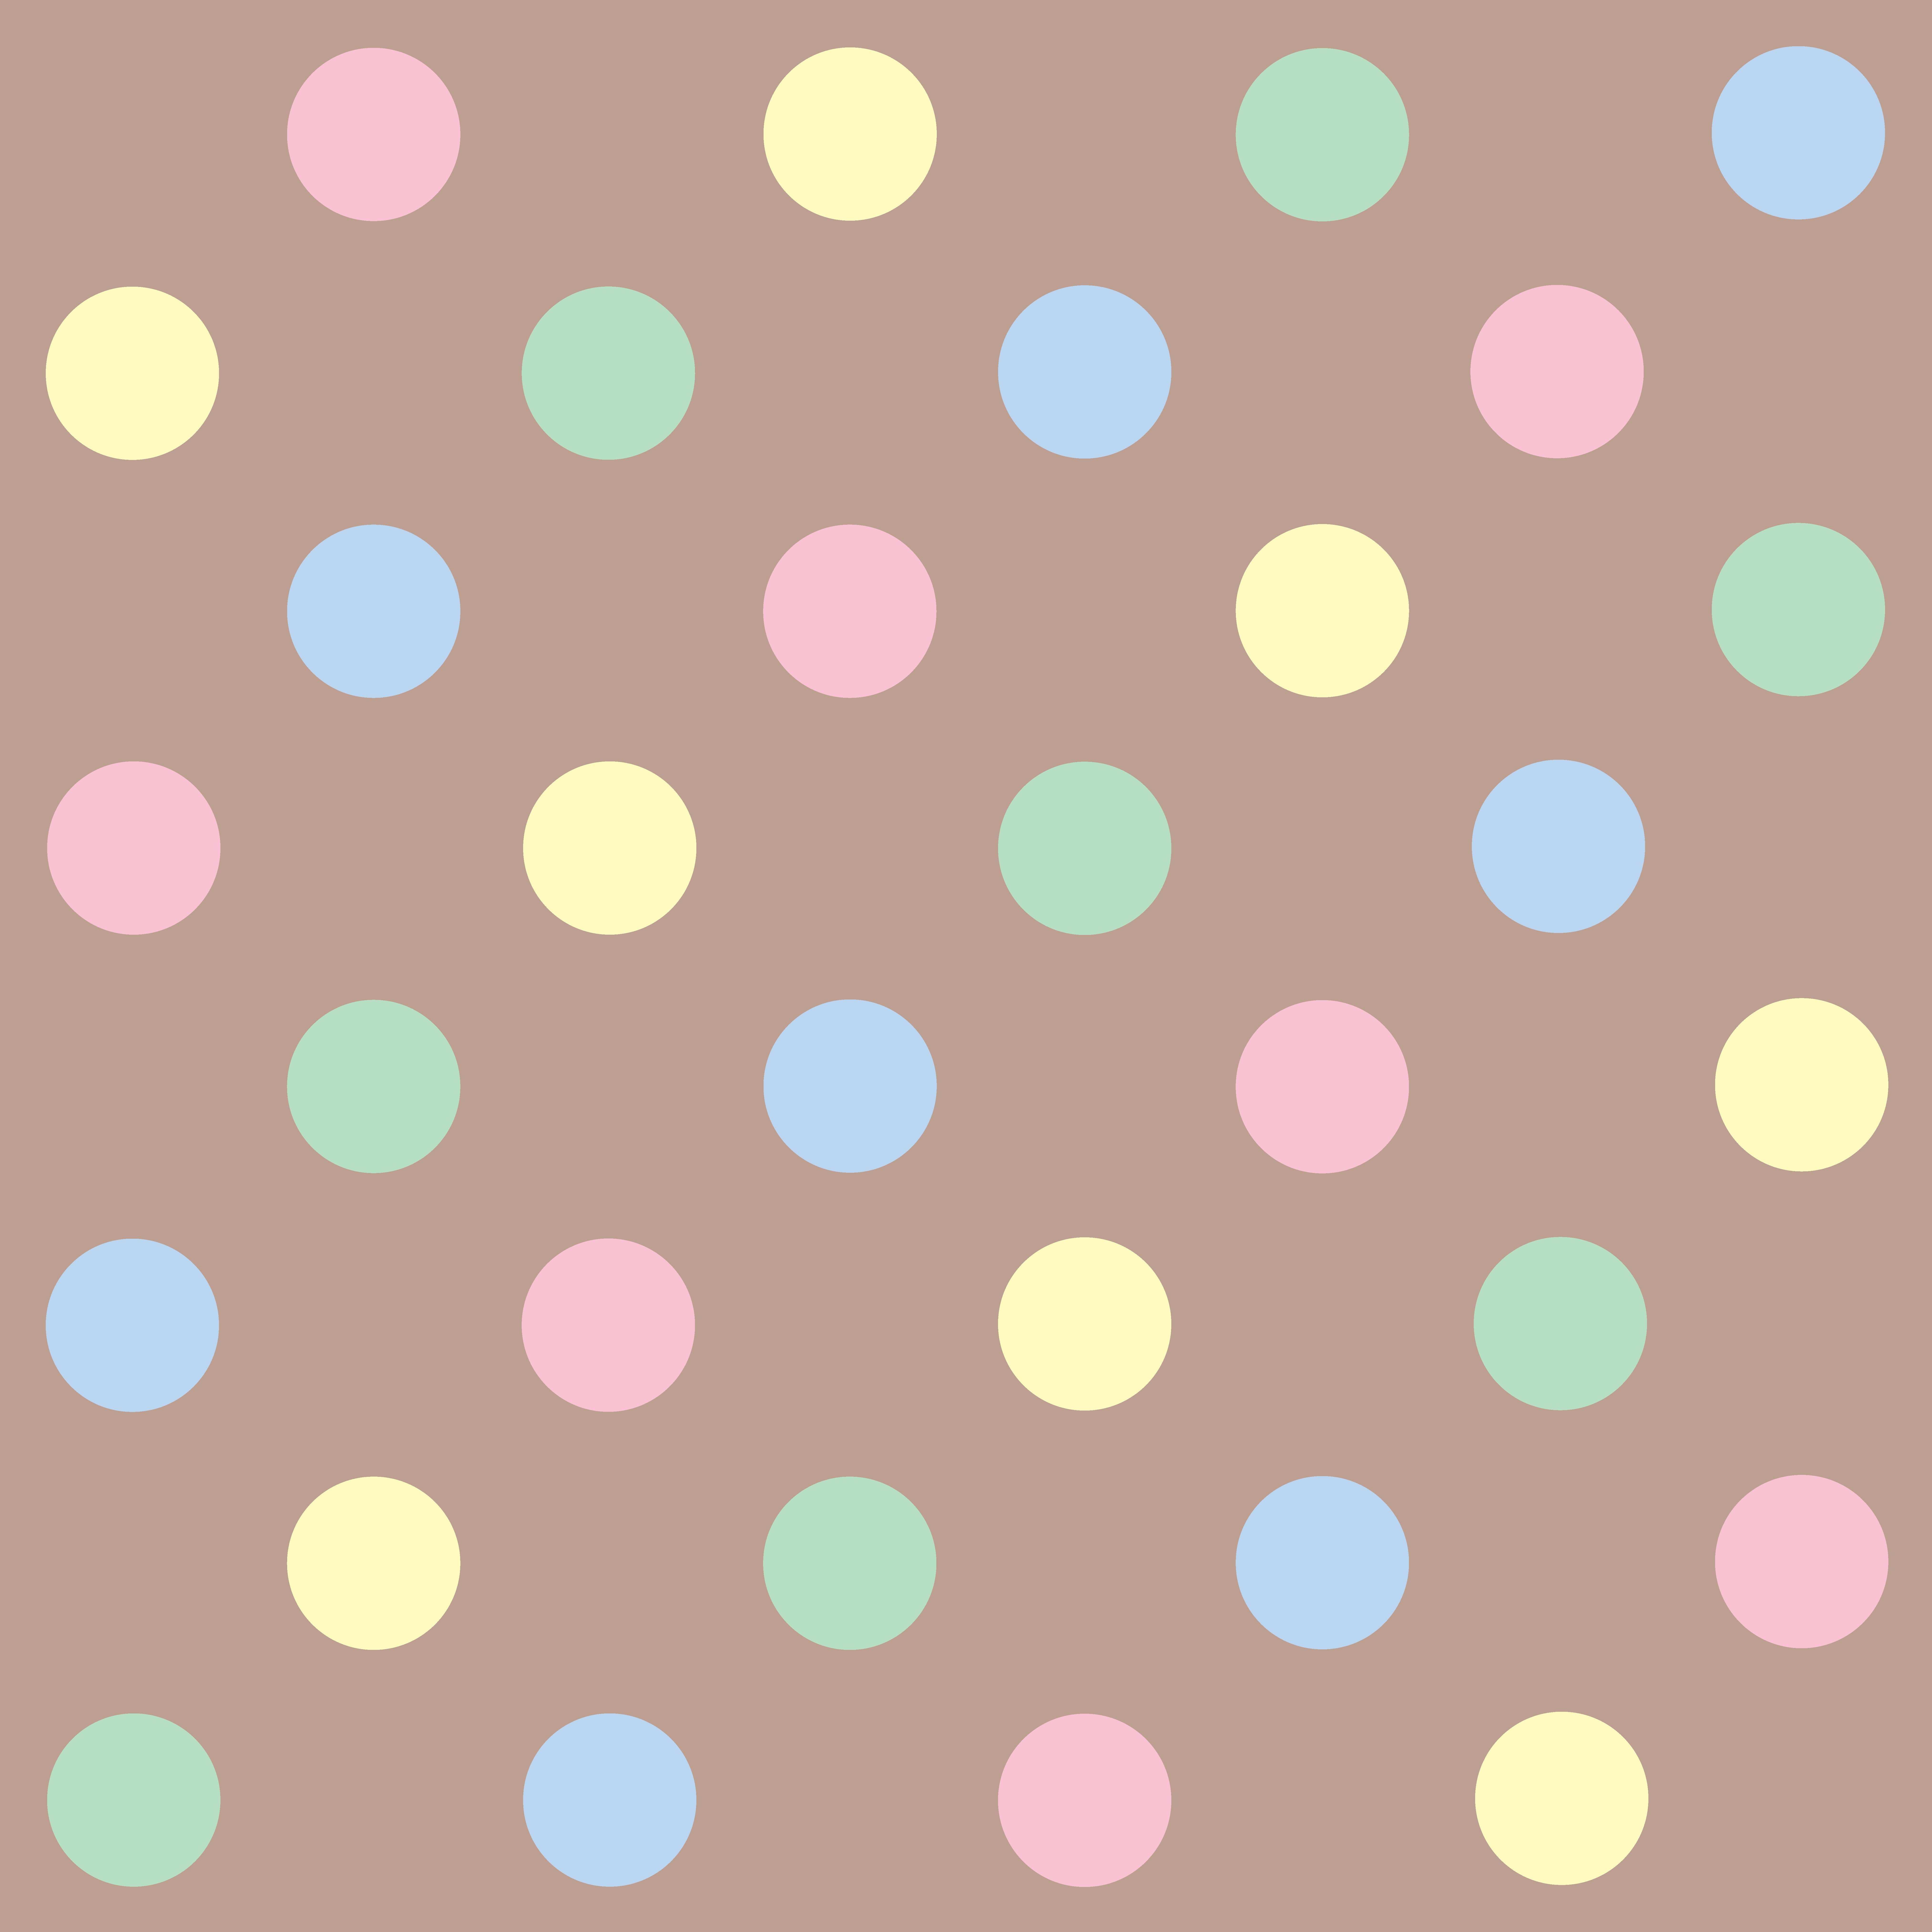 free-polka-dot-background-png-download-free-polka-dot-background-png